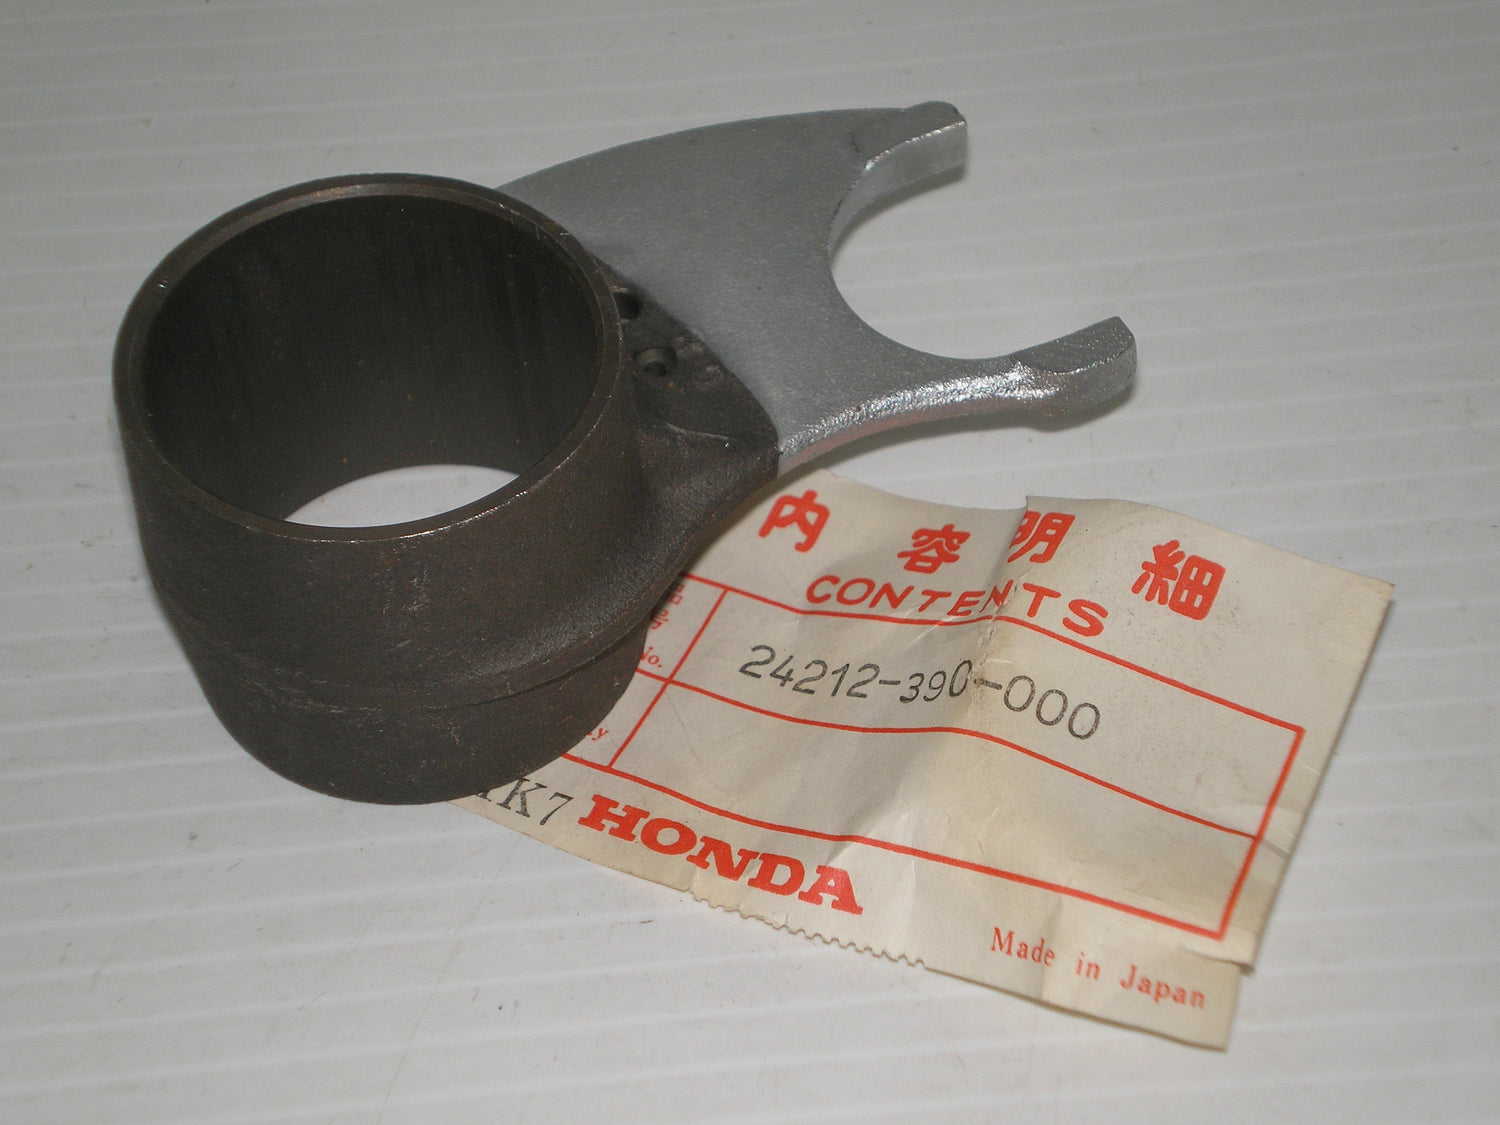 Honda Transmission - Main Shaft / Shift Drum / Shift Fork / Shift Shaft / Transmission Gear / Transmission Oil Seal / Etc.